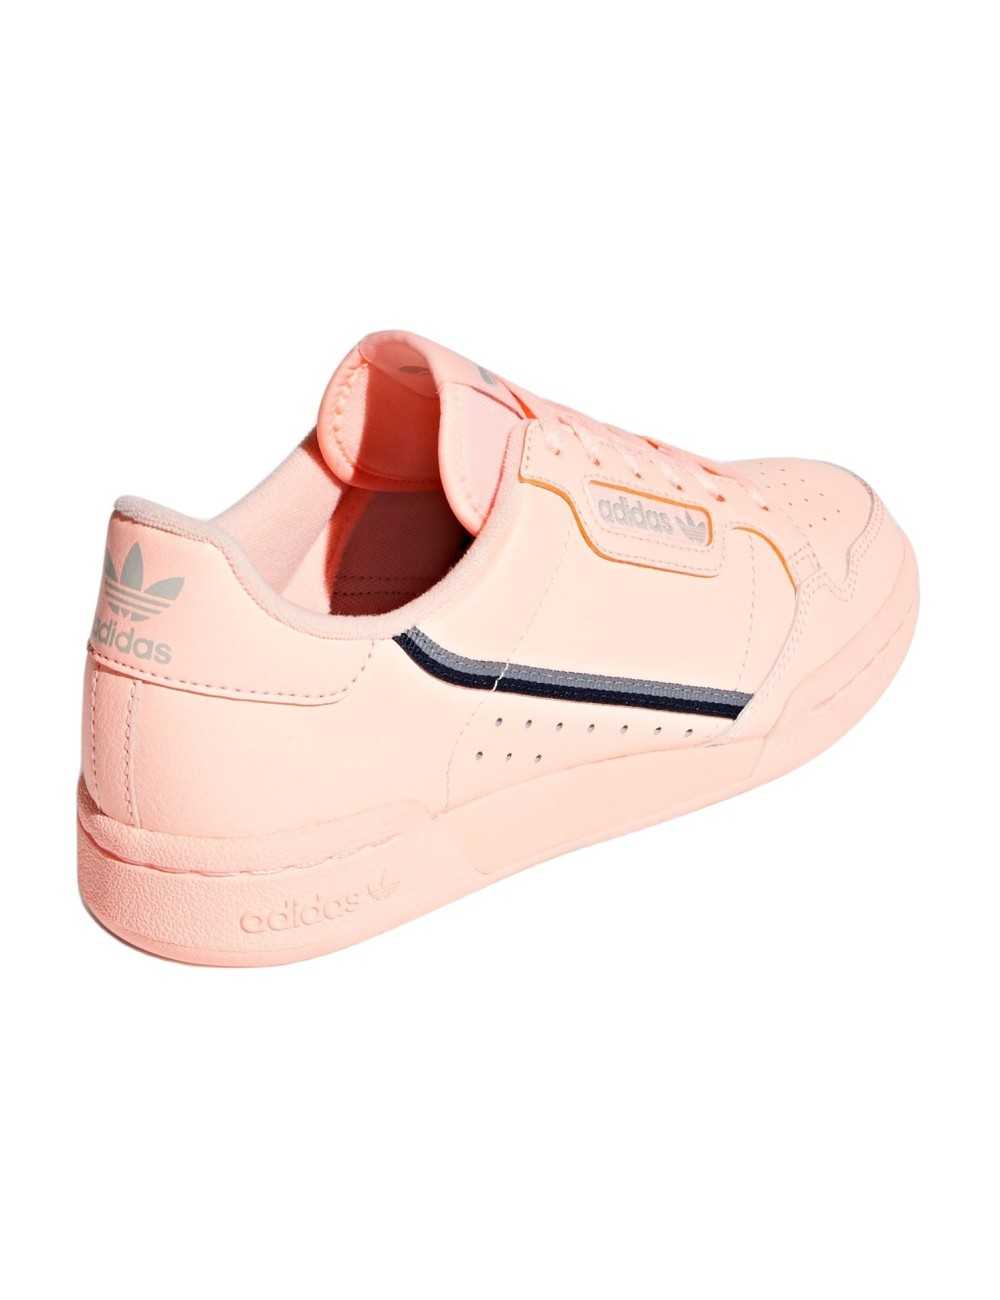 Scarpe Adidas Continental 80 J Pink in pelle - Scarpe Donna Sportive